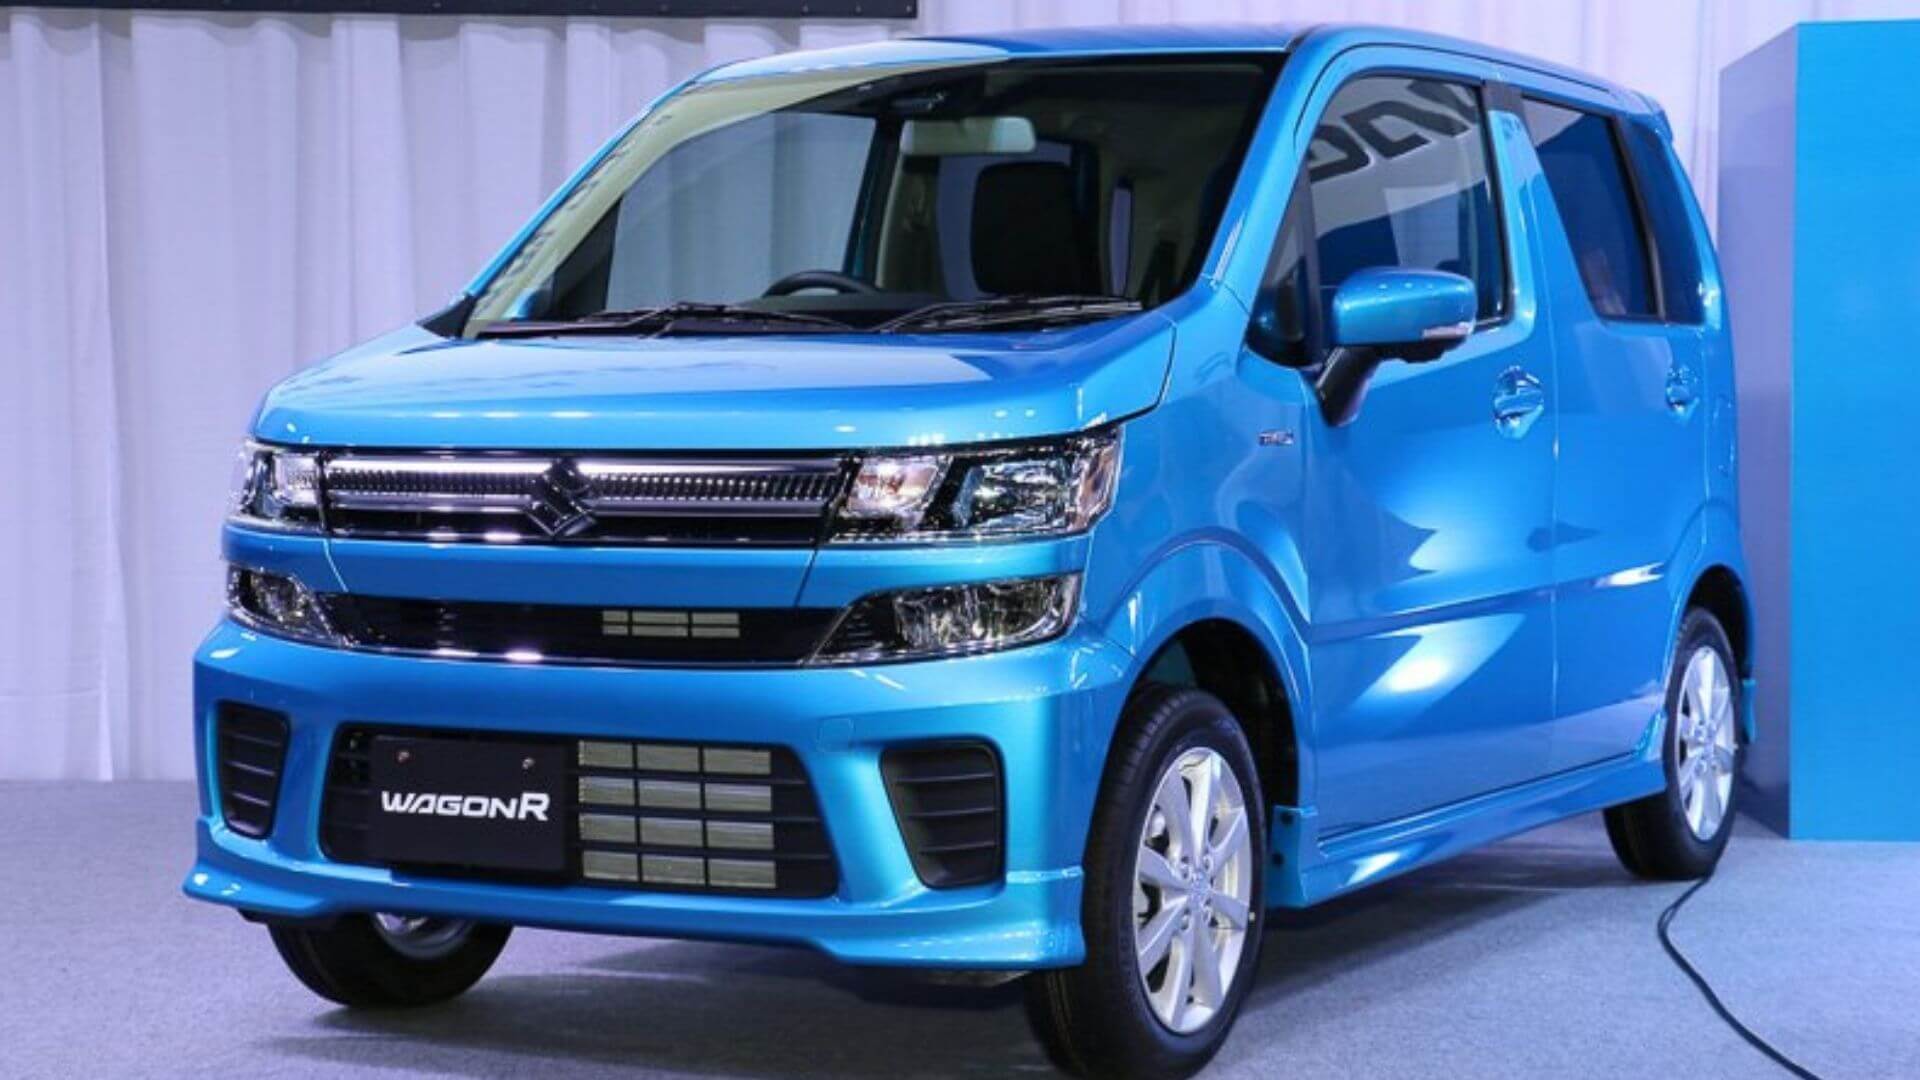 https://e-vehicleinfo.com/maruti-suzuki-wagon-r-ev-price-launch-date-and-range/